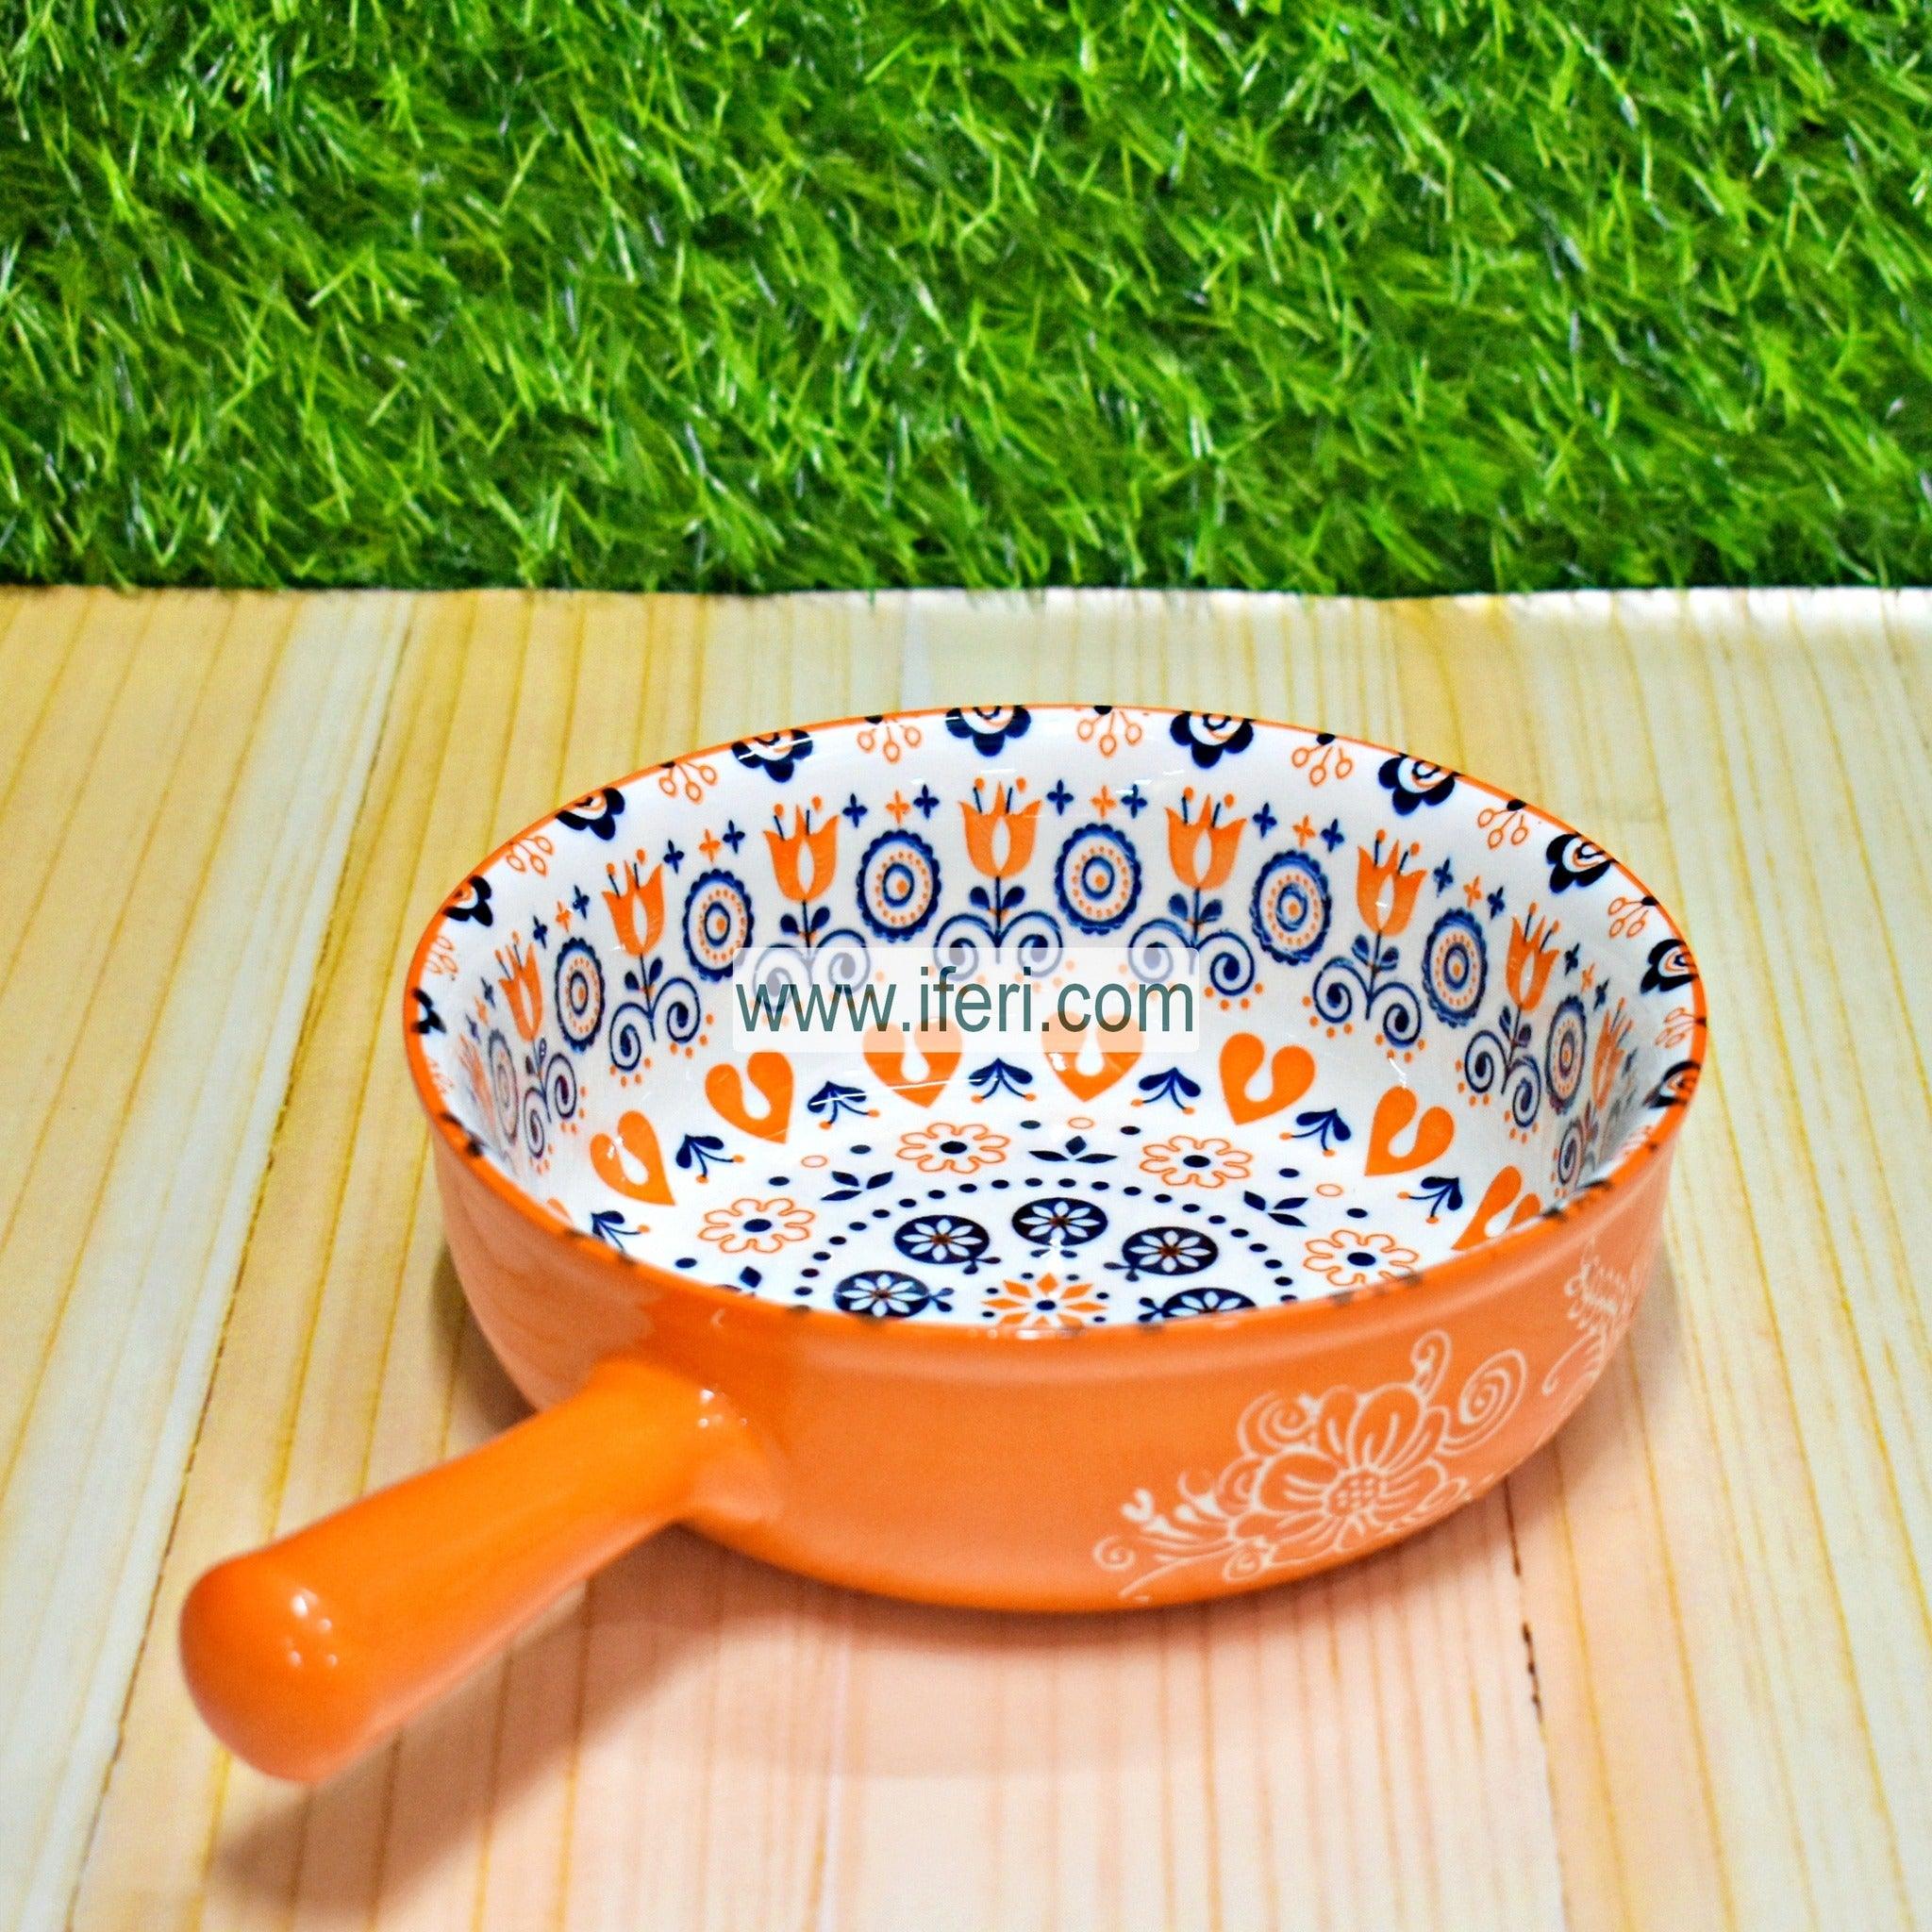 10 Inch Pan Shaped Ceramic Serving Dish SY0085 Price in Bangladesh - iferi.com